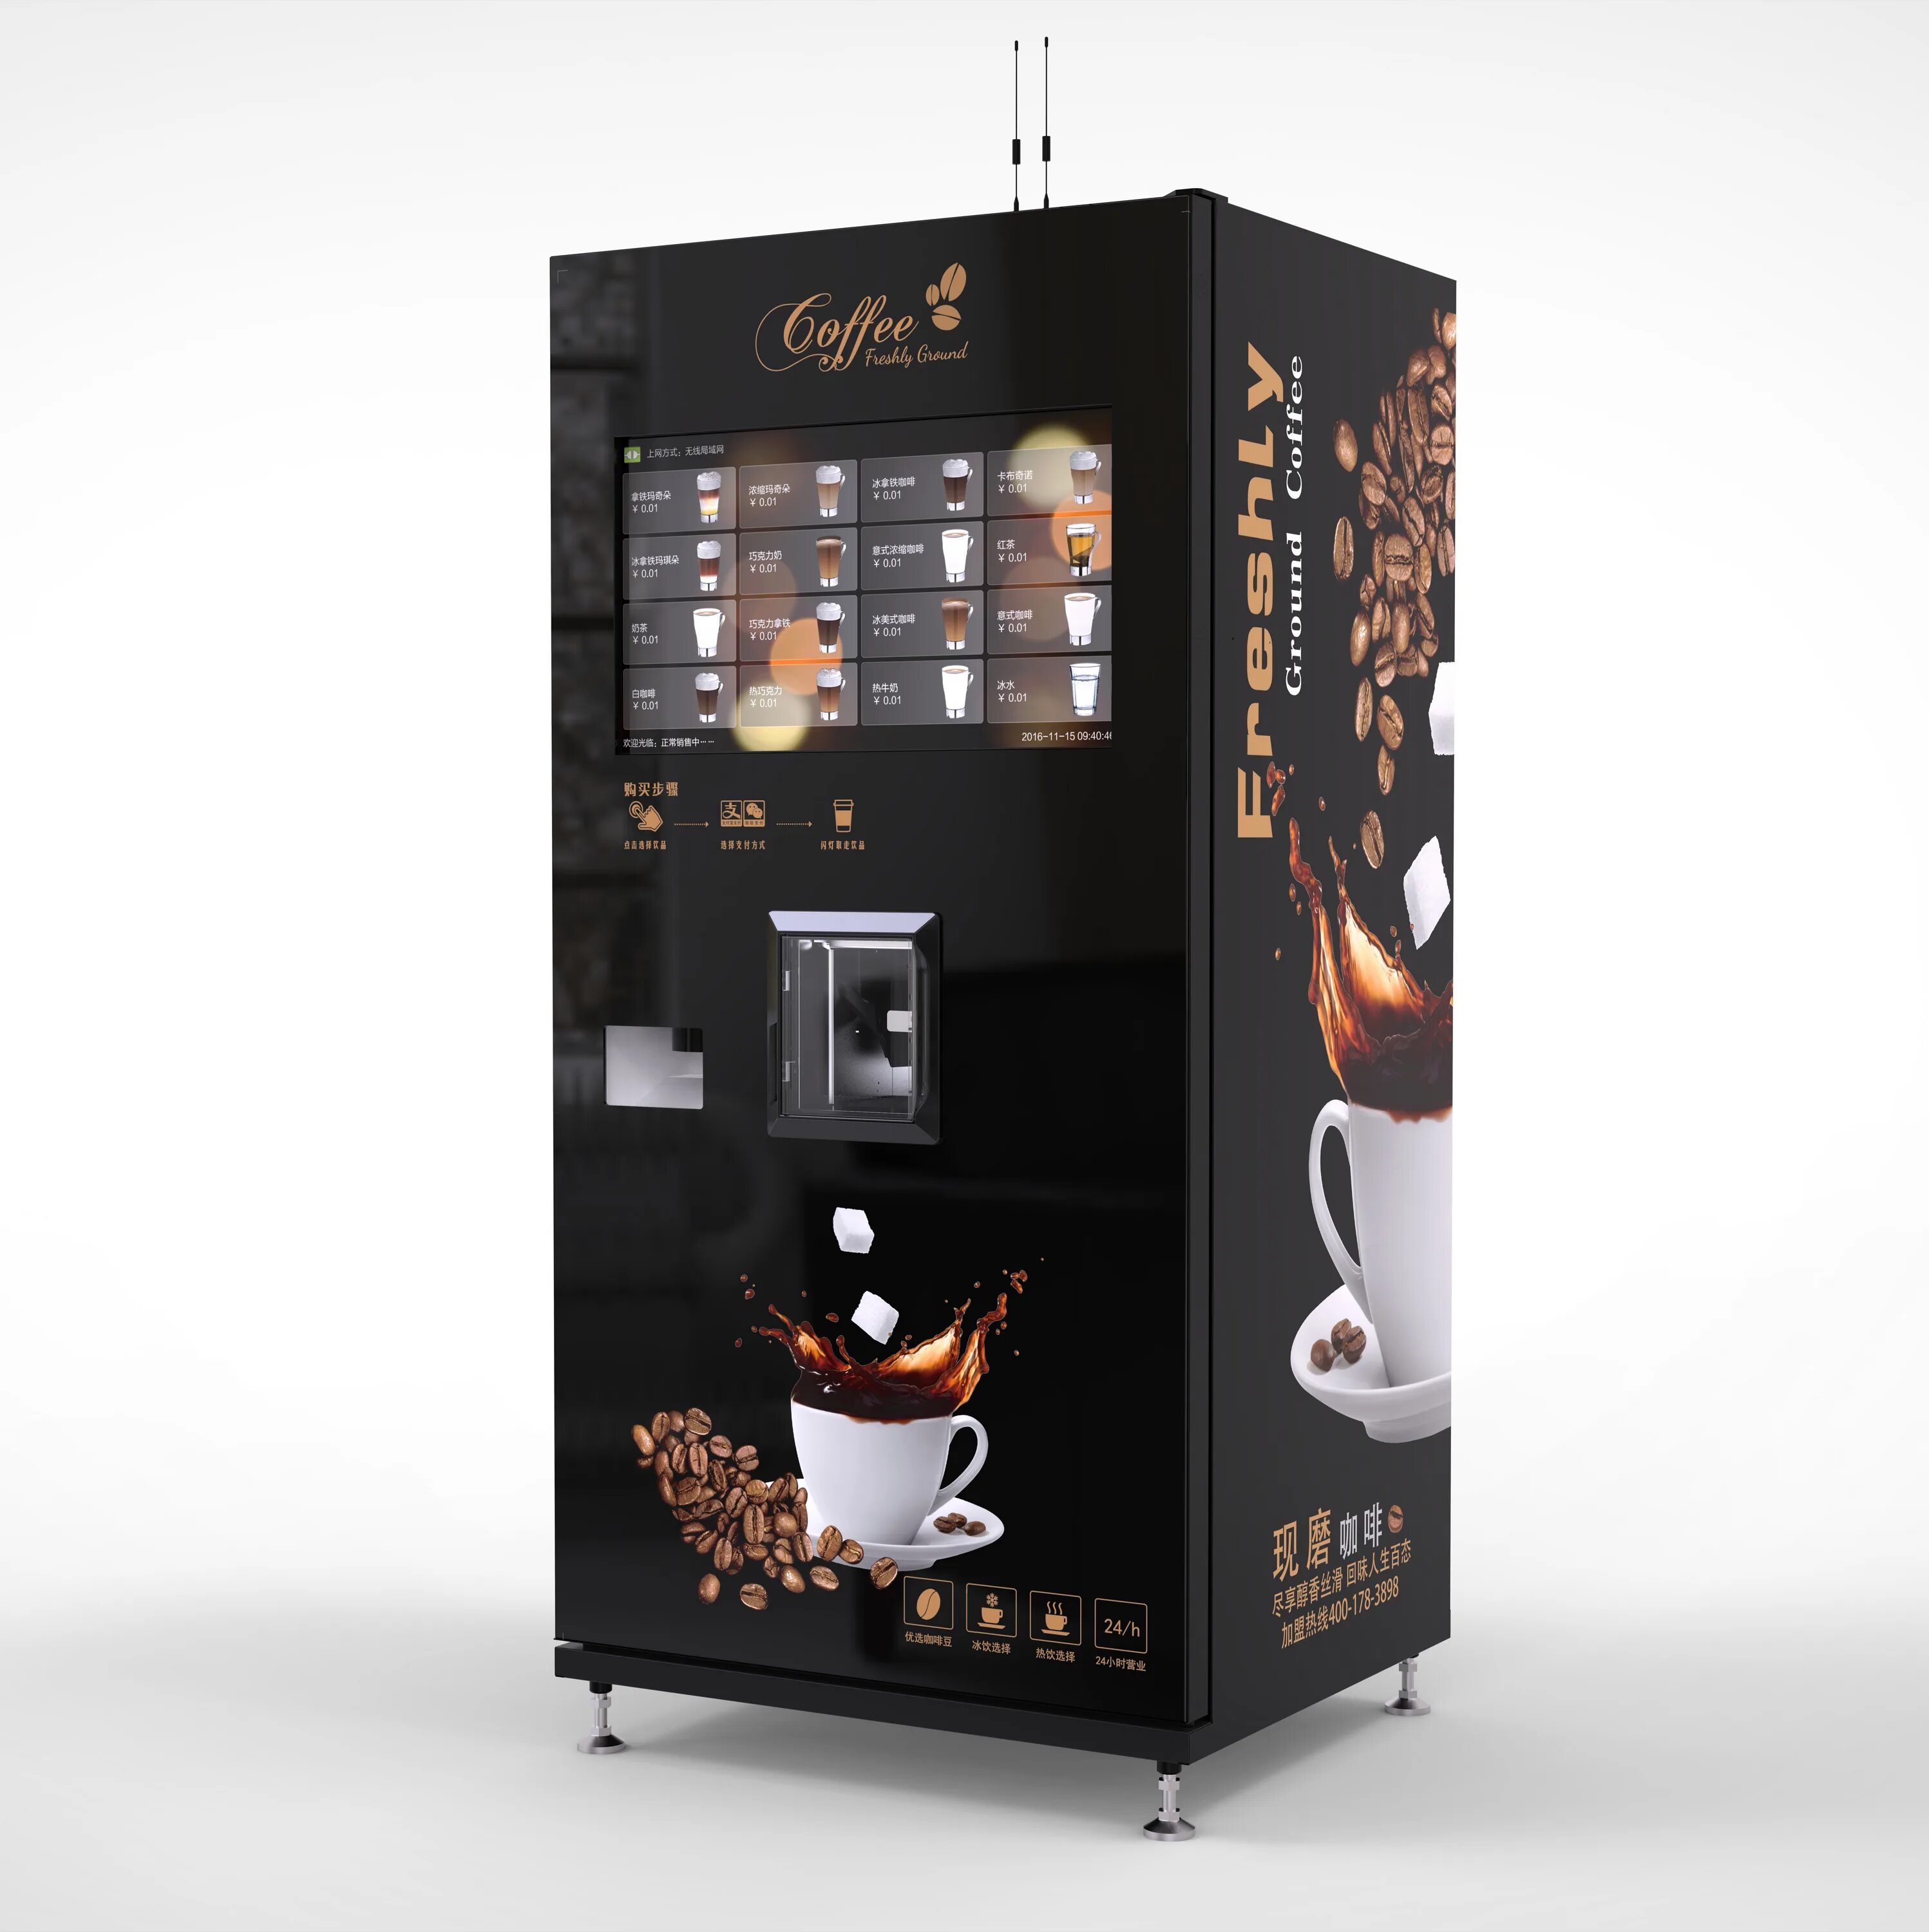 Кофейный автомат Saeco Oasi 400. Кофейный торговый автомат Saeco Atlante 500 1 кофемолка. Вендинговые аппараты Necta. Вендинговый аппарат Саеко 400. Кофейный аппарат кофе